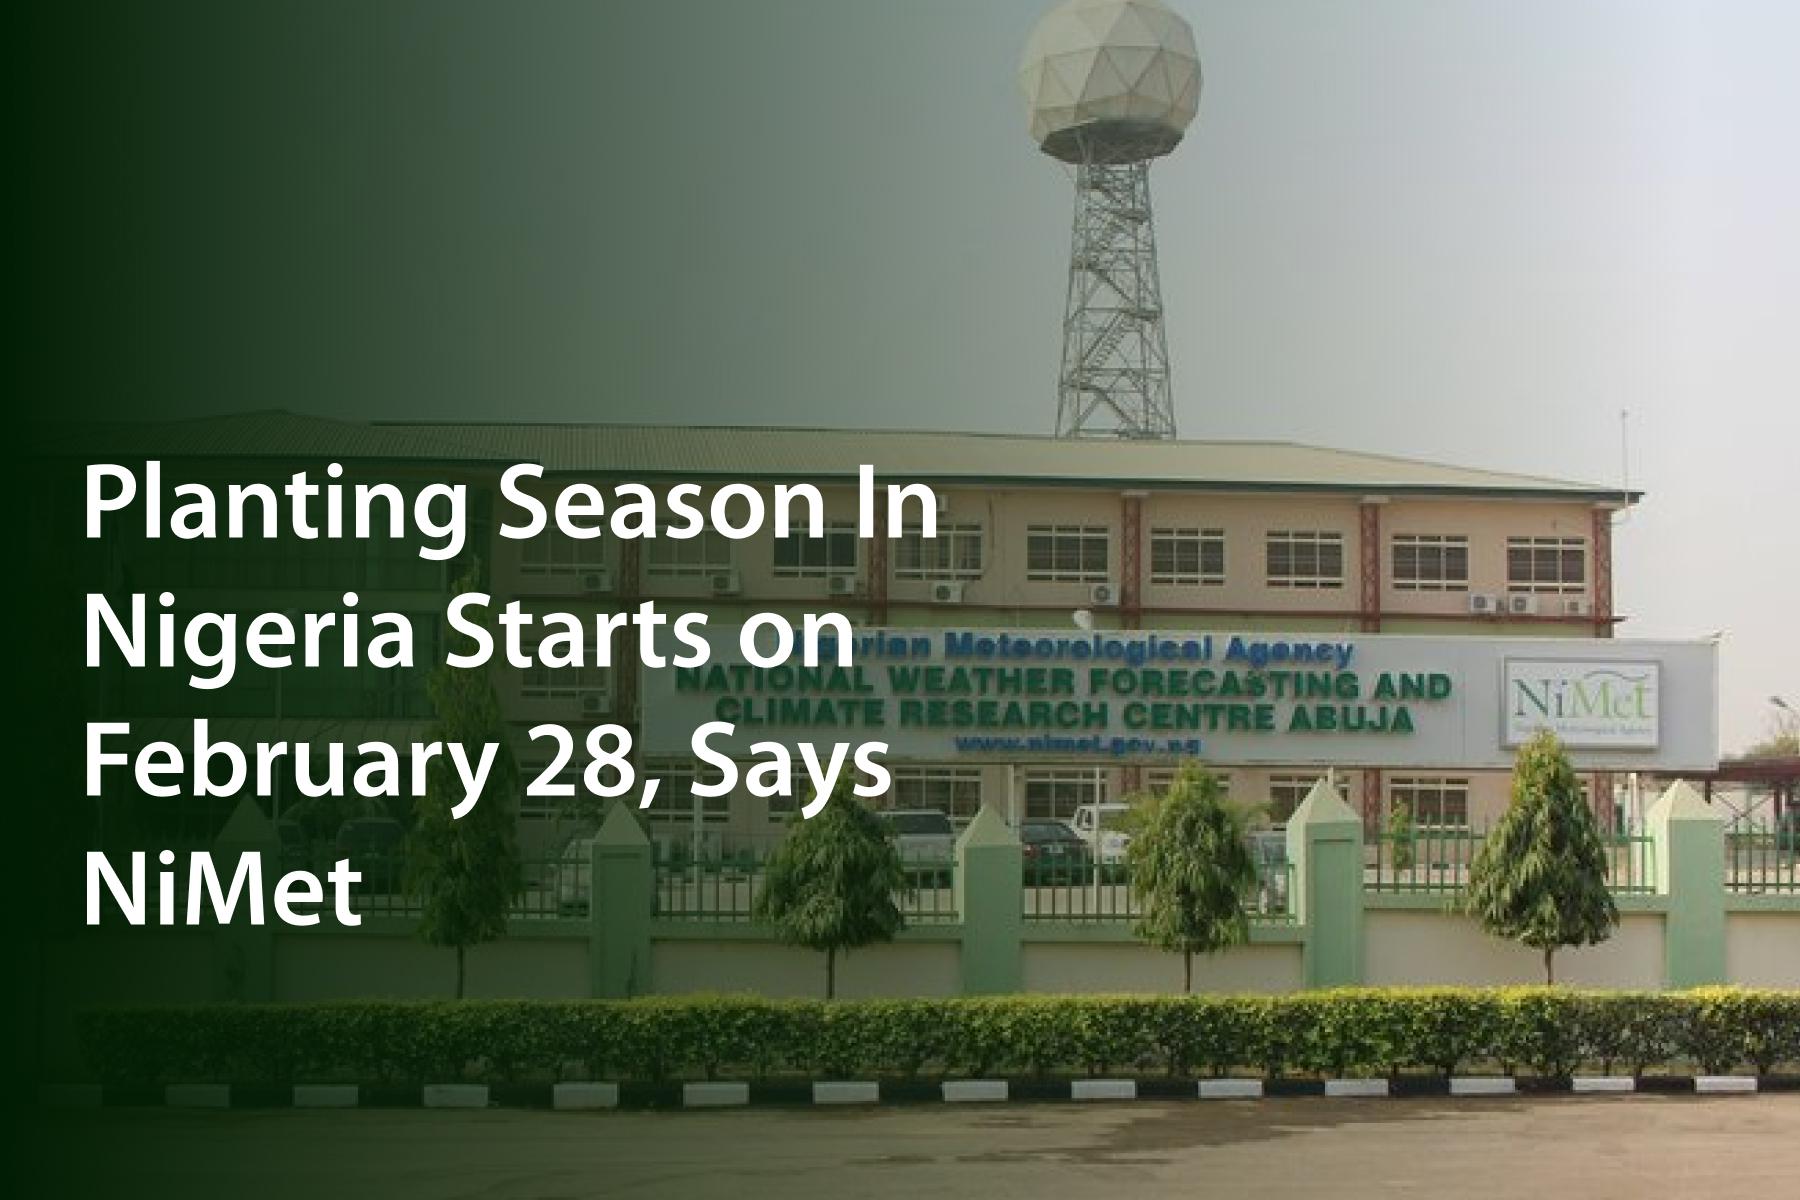 Planting Season In Nigeria Starts on February 28, Says NiMet